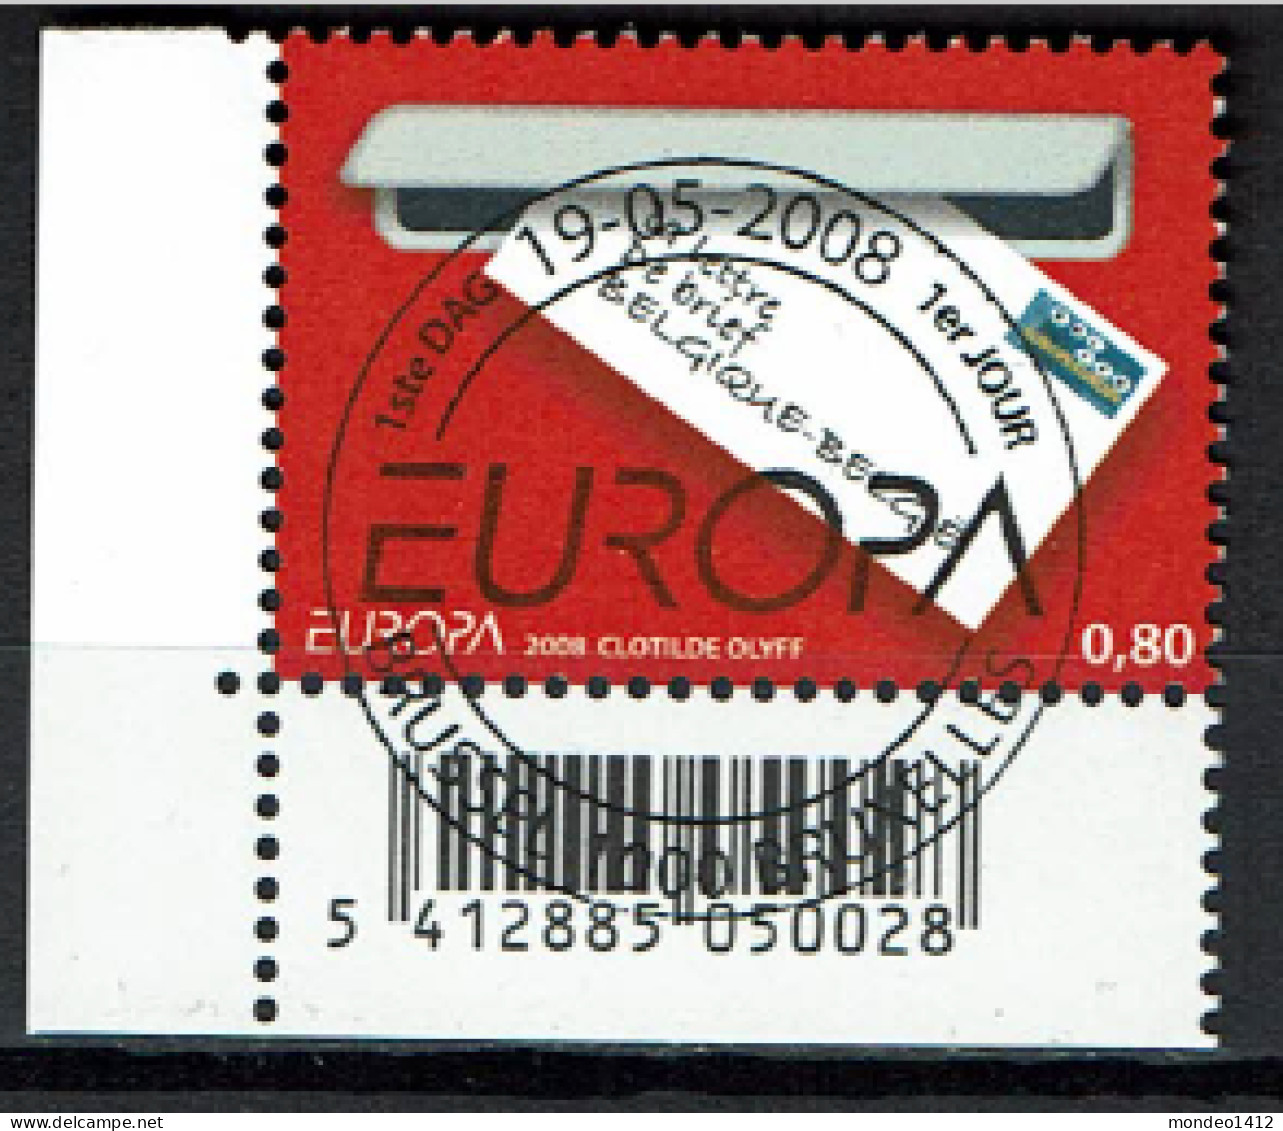 België OBP 3780 - Europa - Gebraucht